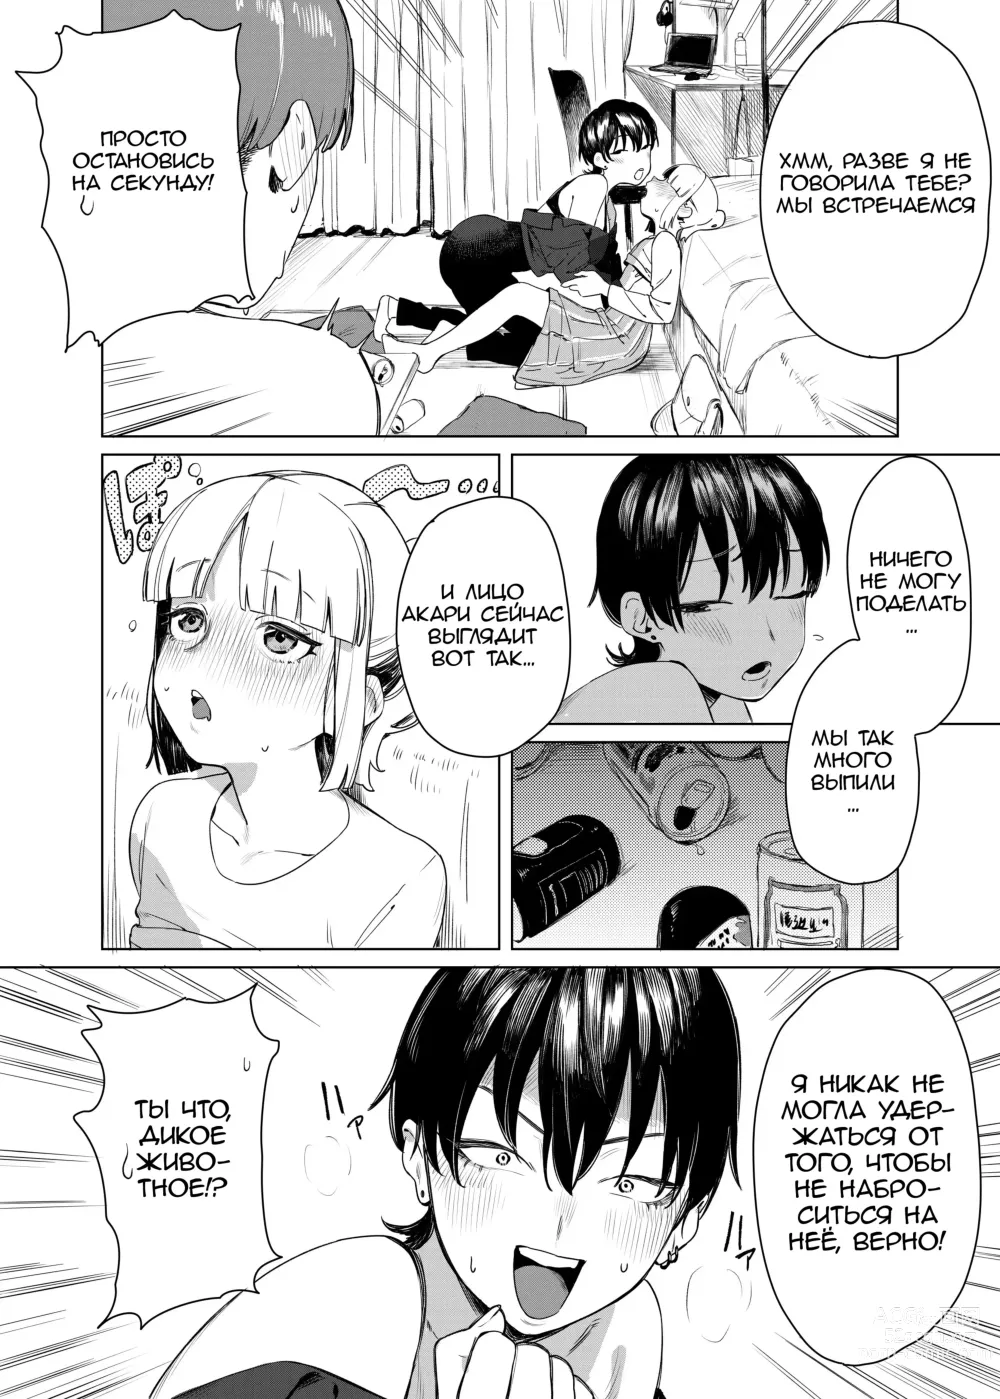 Page 3 of doujinshi Sandwiched By Yuri.